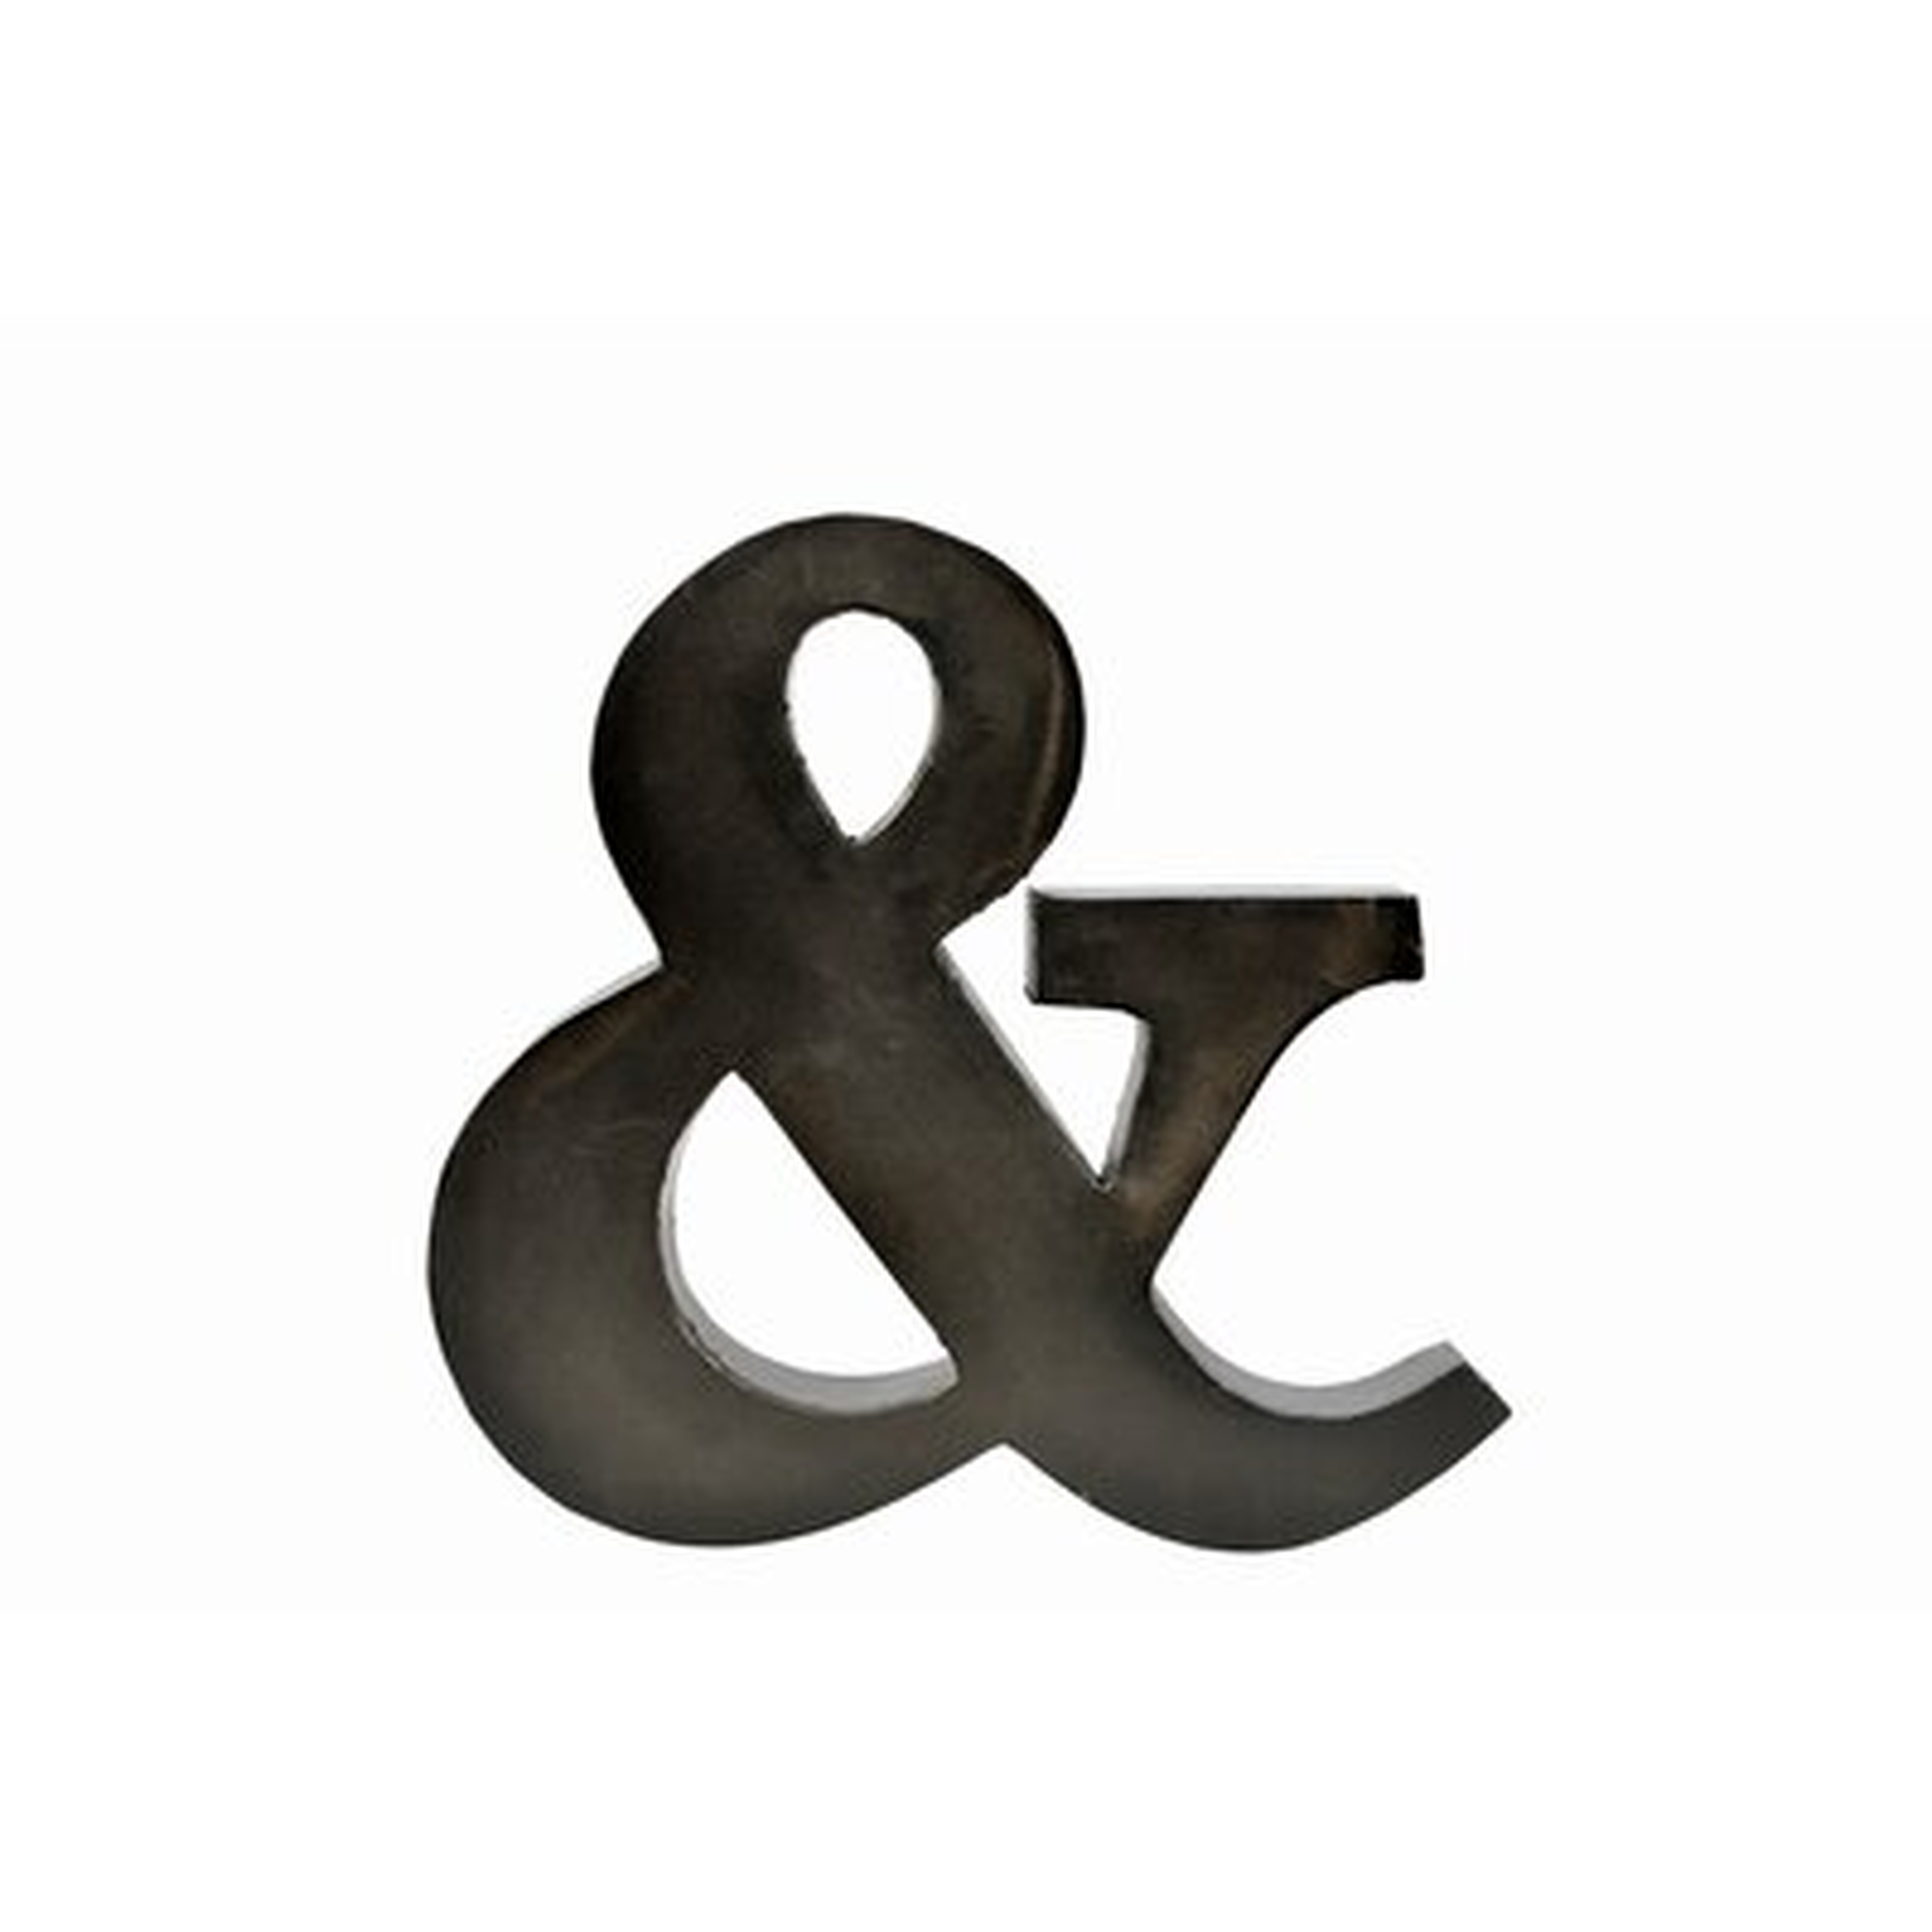 Biddulph "&" Decorative Metal Letter Blocks - Wayfair